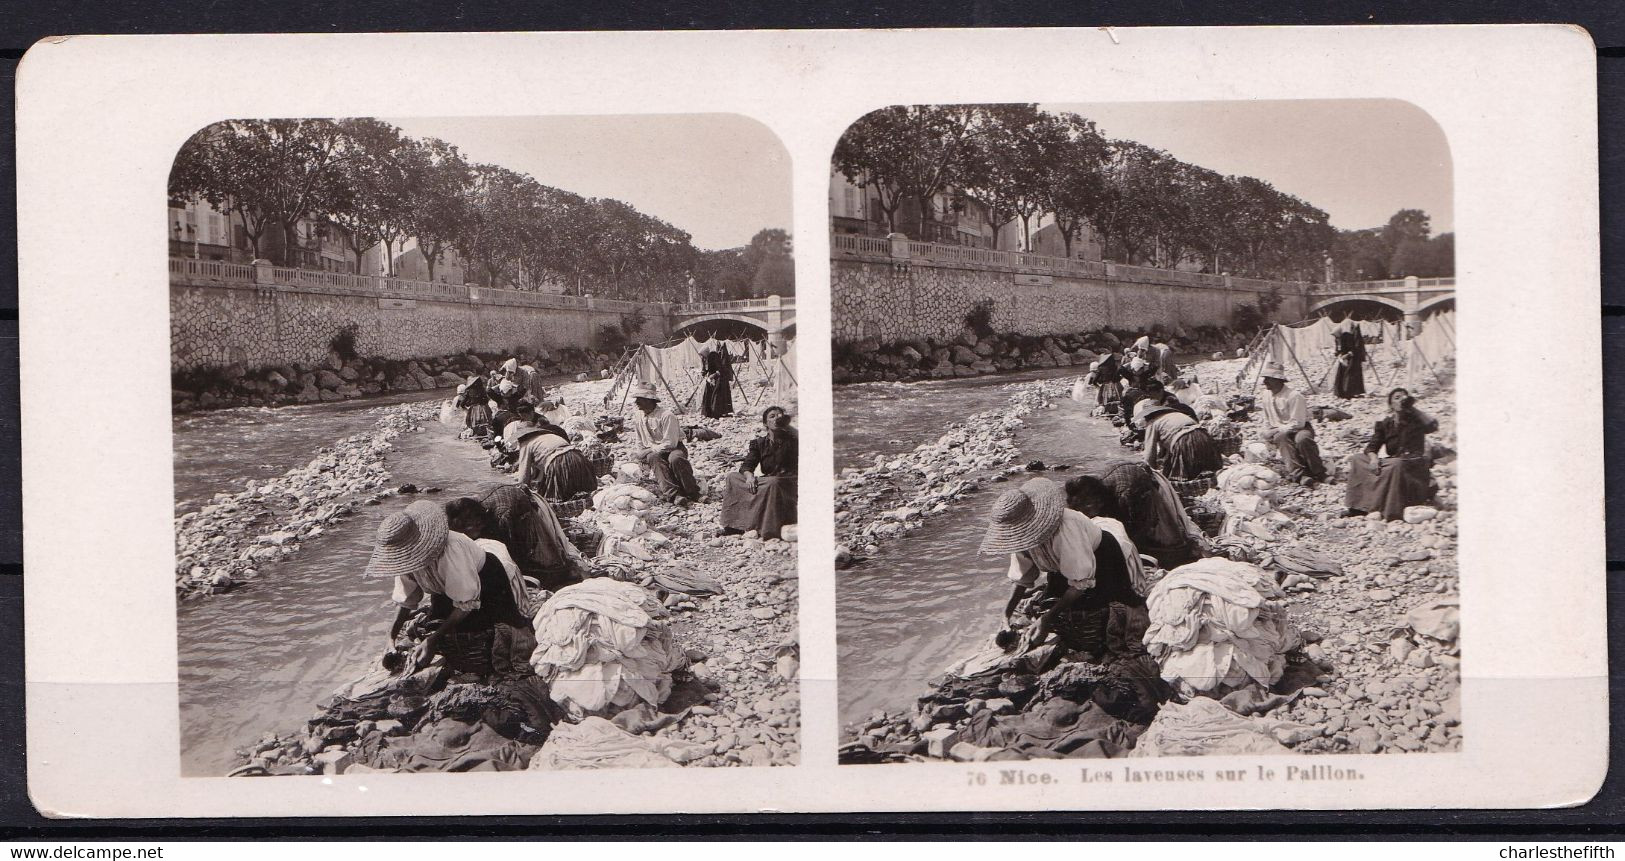 ORIGINALE PHOTO STEREO DEBUT 1900 * NICE - LES LAVEUSES SUR LE PALLION * - Stereoskope - Stereobetrachter